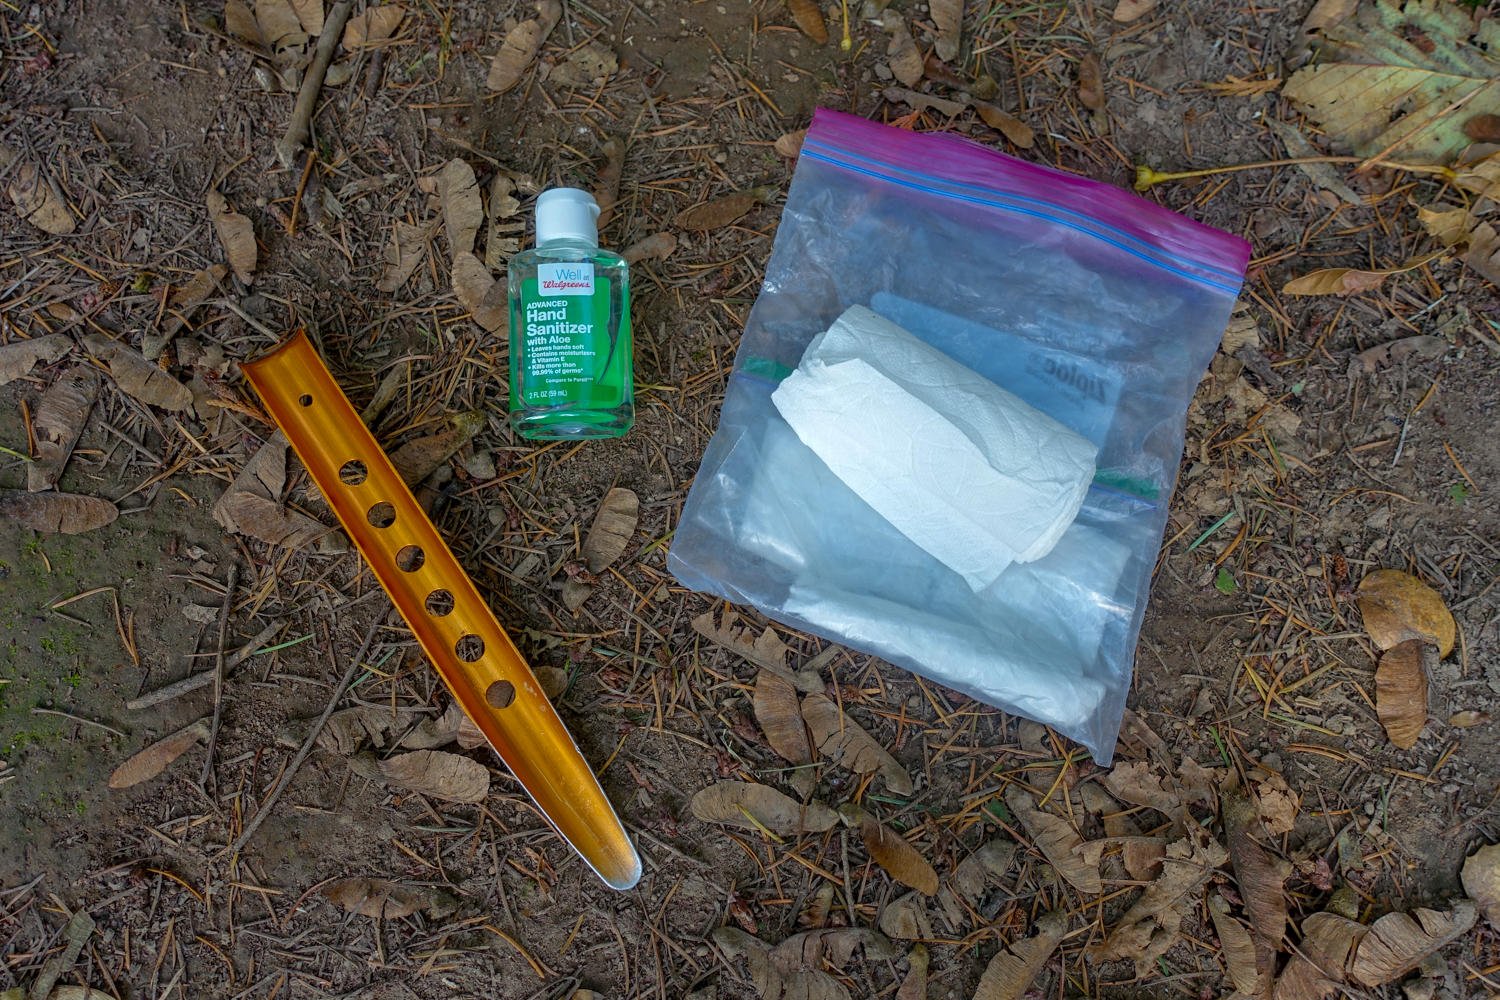 An ultralight poop kit for hiking